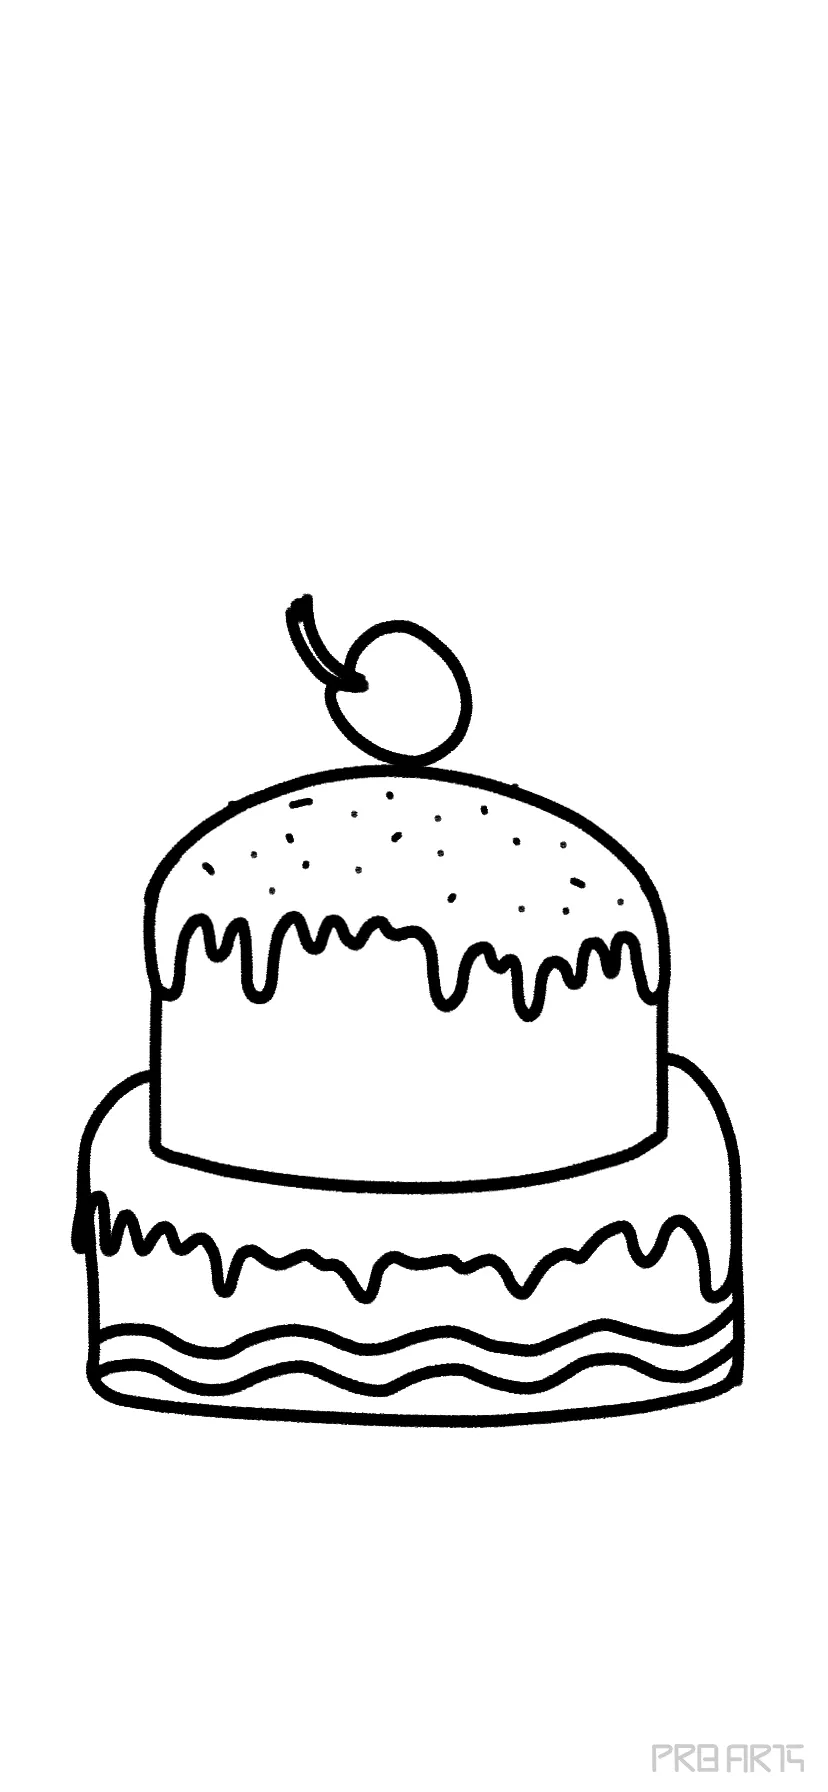 Birthday Cake Drawing for Kids - PRB ARTS-saigonsouth.com.vn